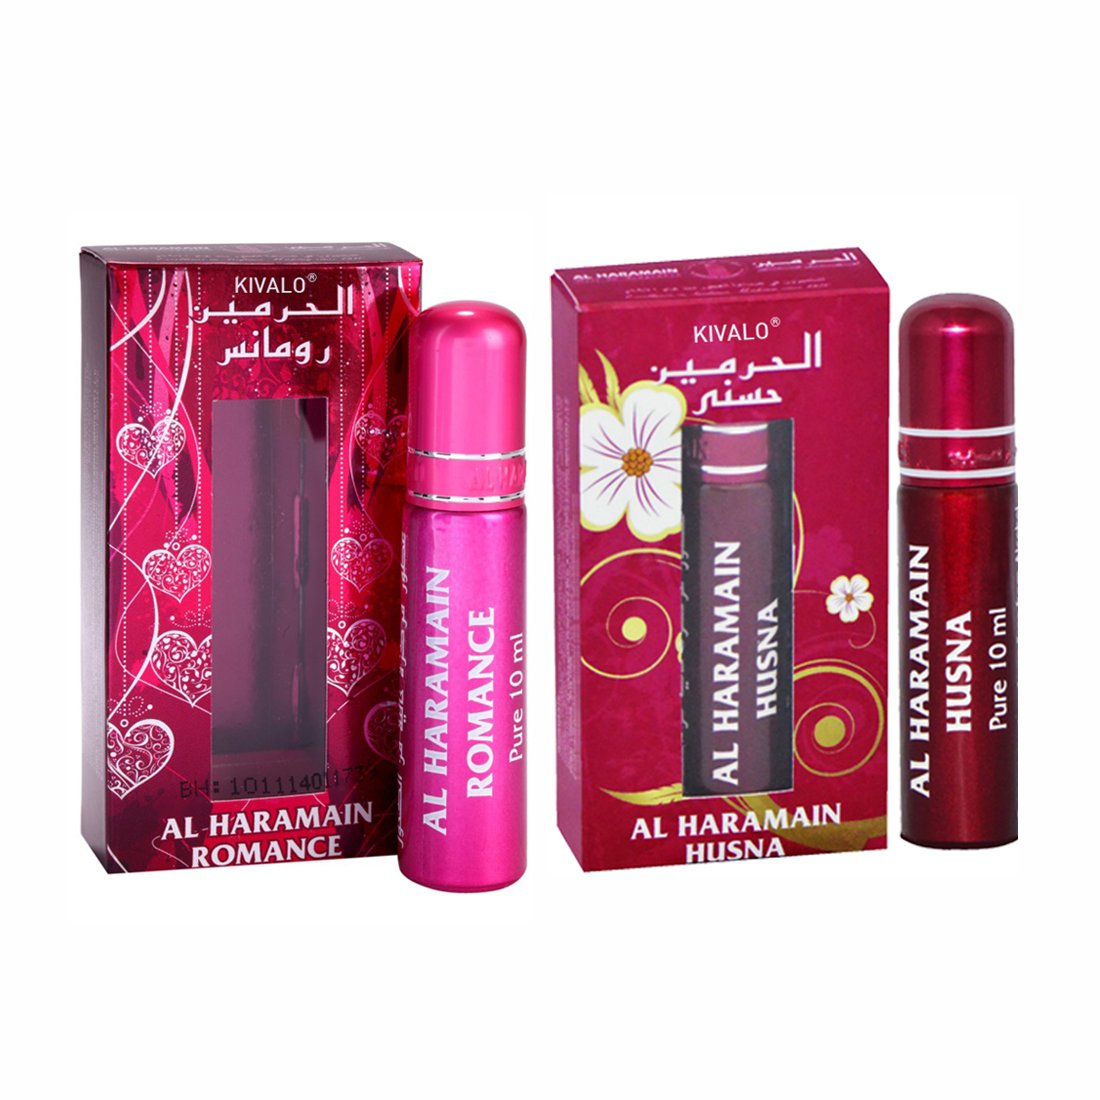 Al Haramain Romance & Husna Roll On Attar 10 ml Pack of 2